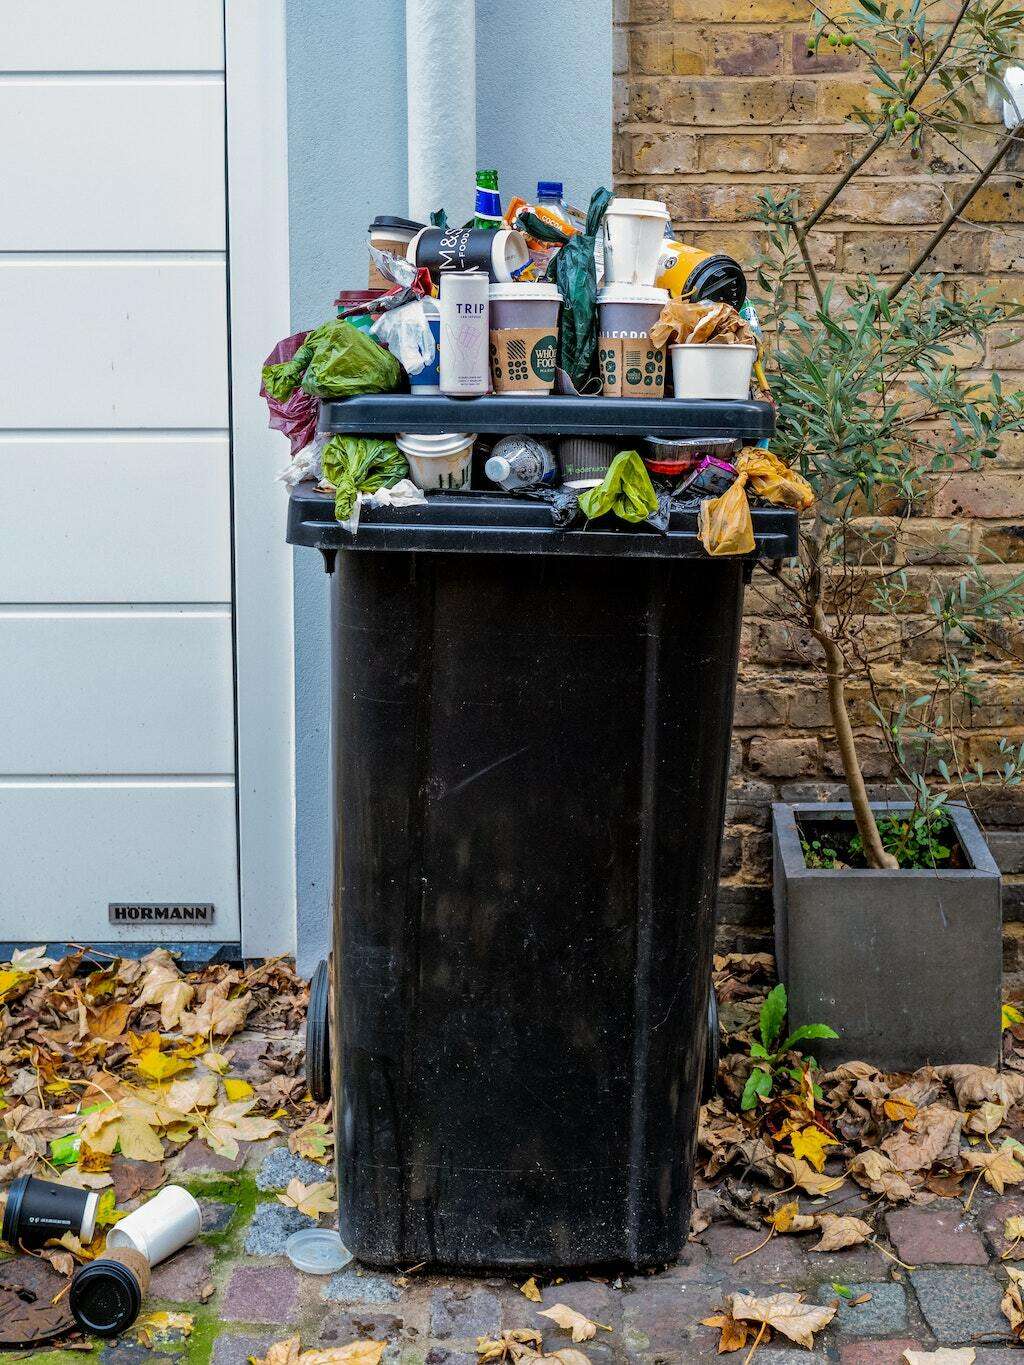 An overstuffed trash bin